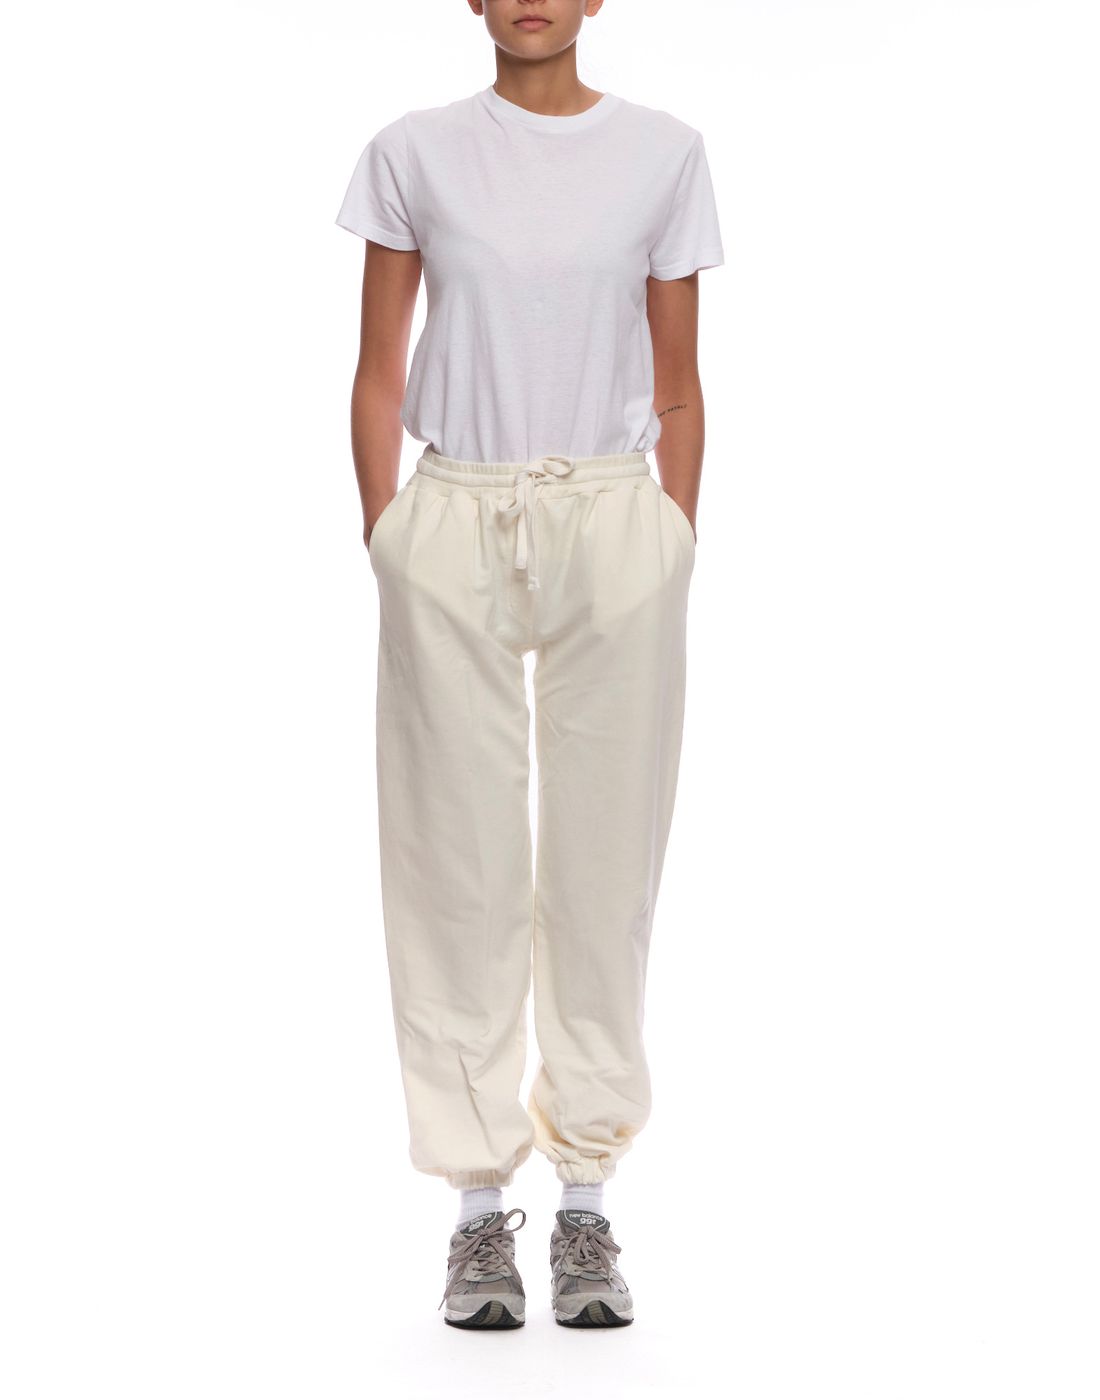 Pantalones para la mujer CROSSLEY Rar 251